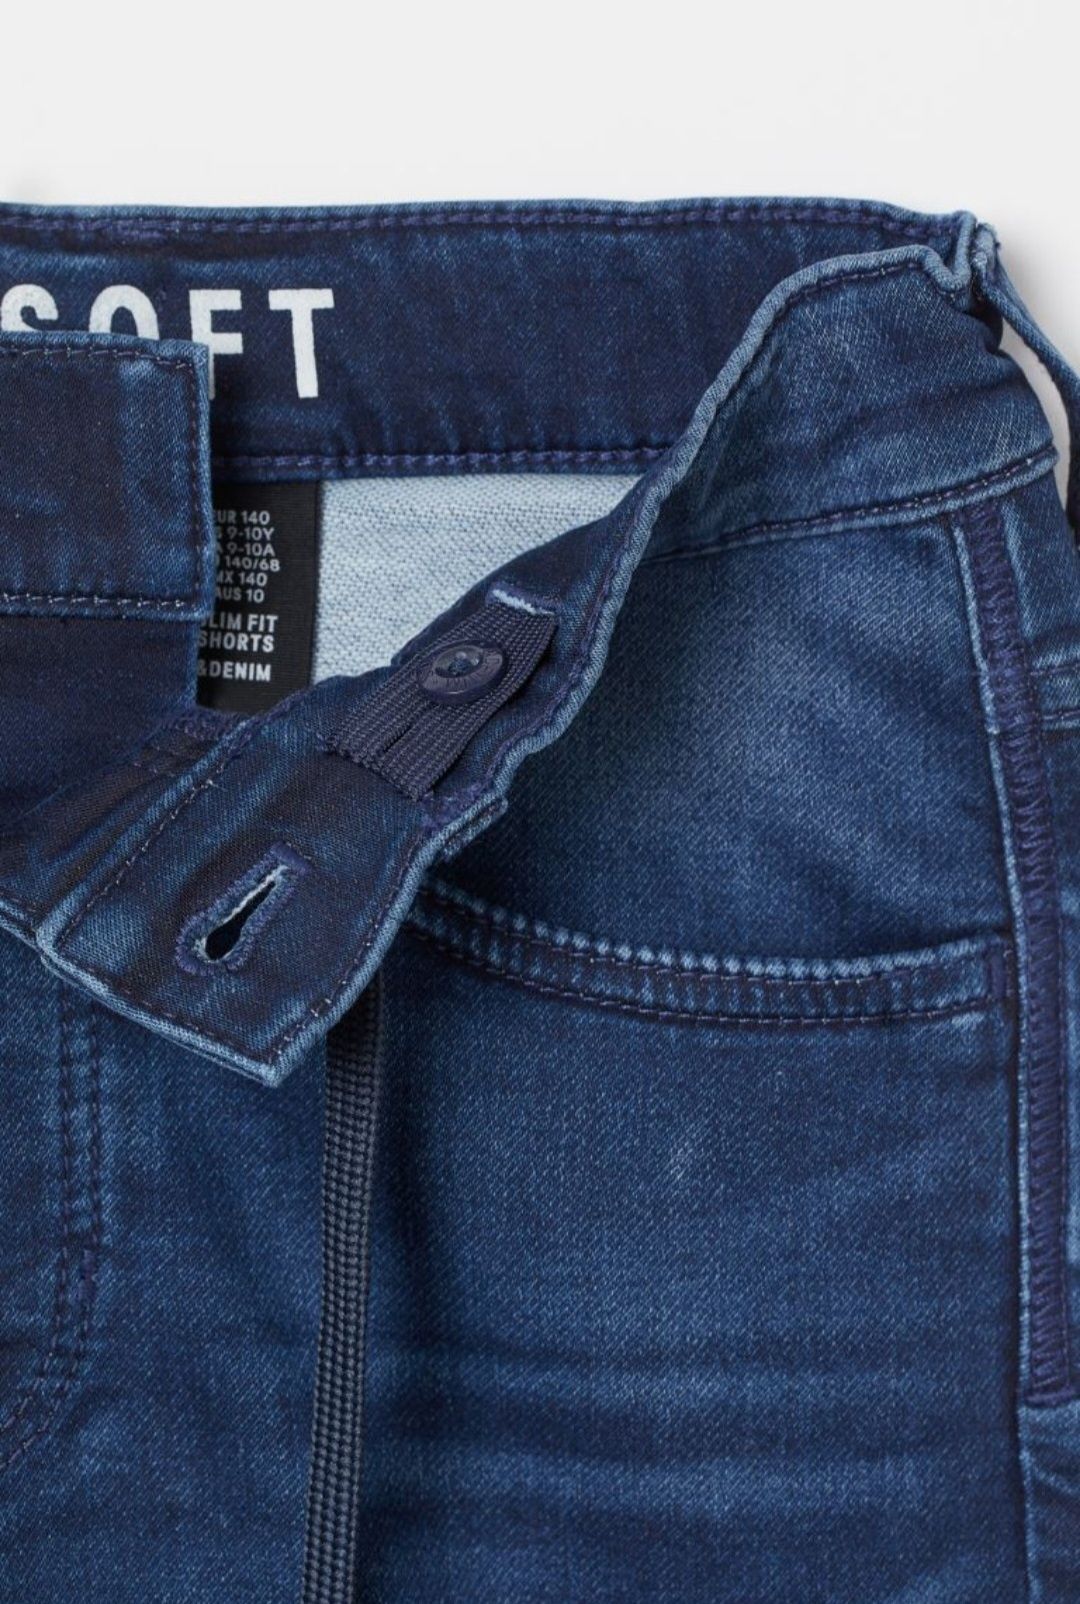 H&M szorty spodenki jeans super soft 146 jak nowe